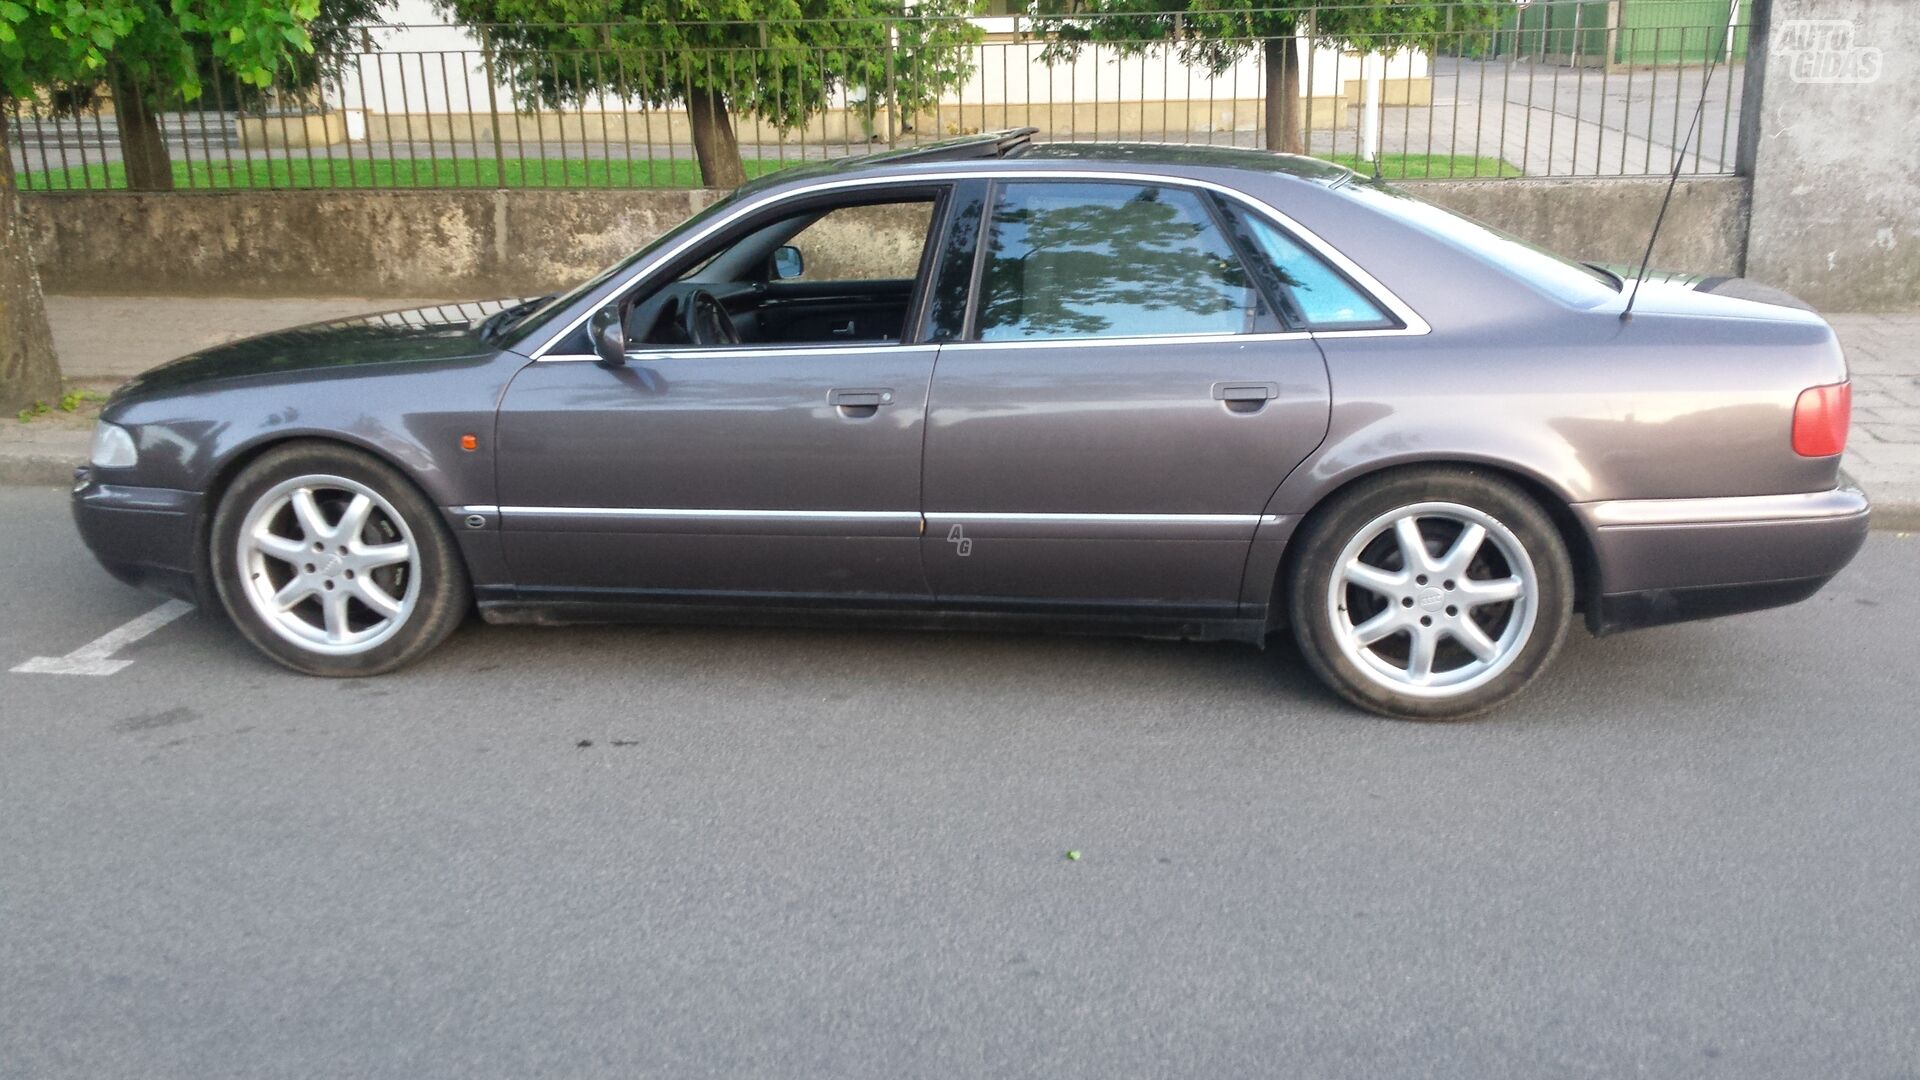 Audi A8 D2 1996 г запчясти